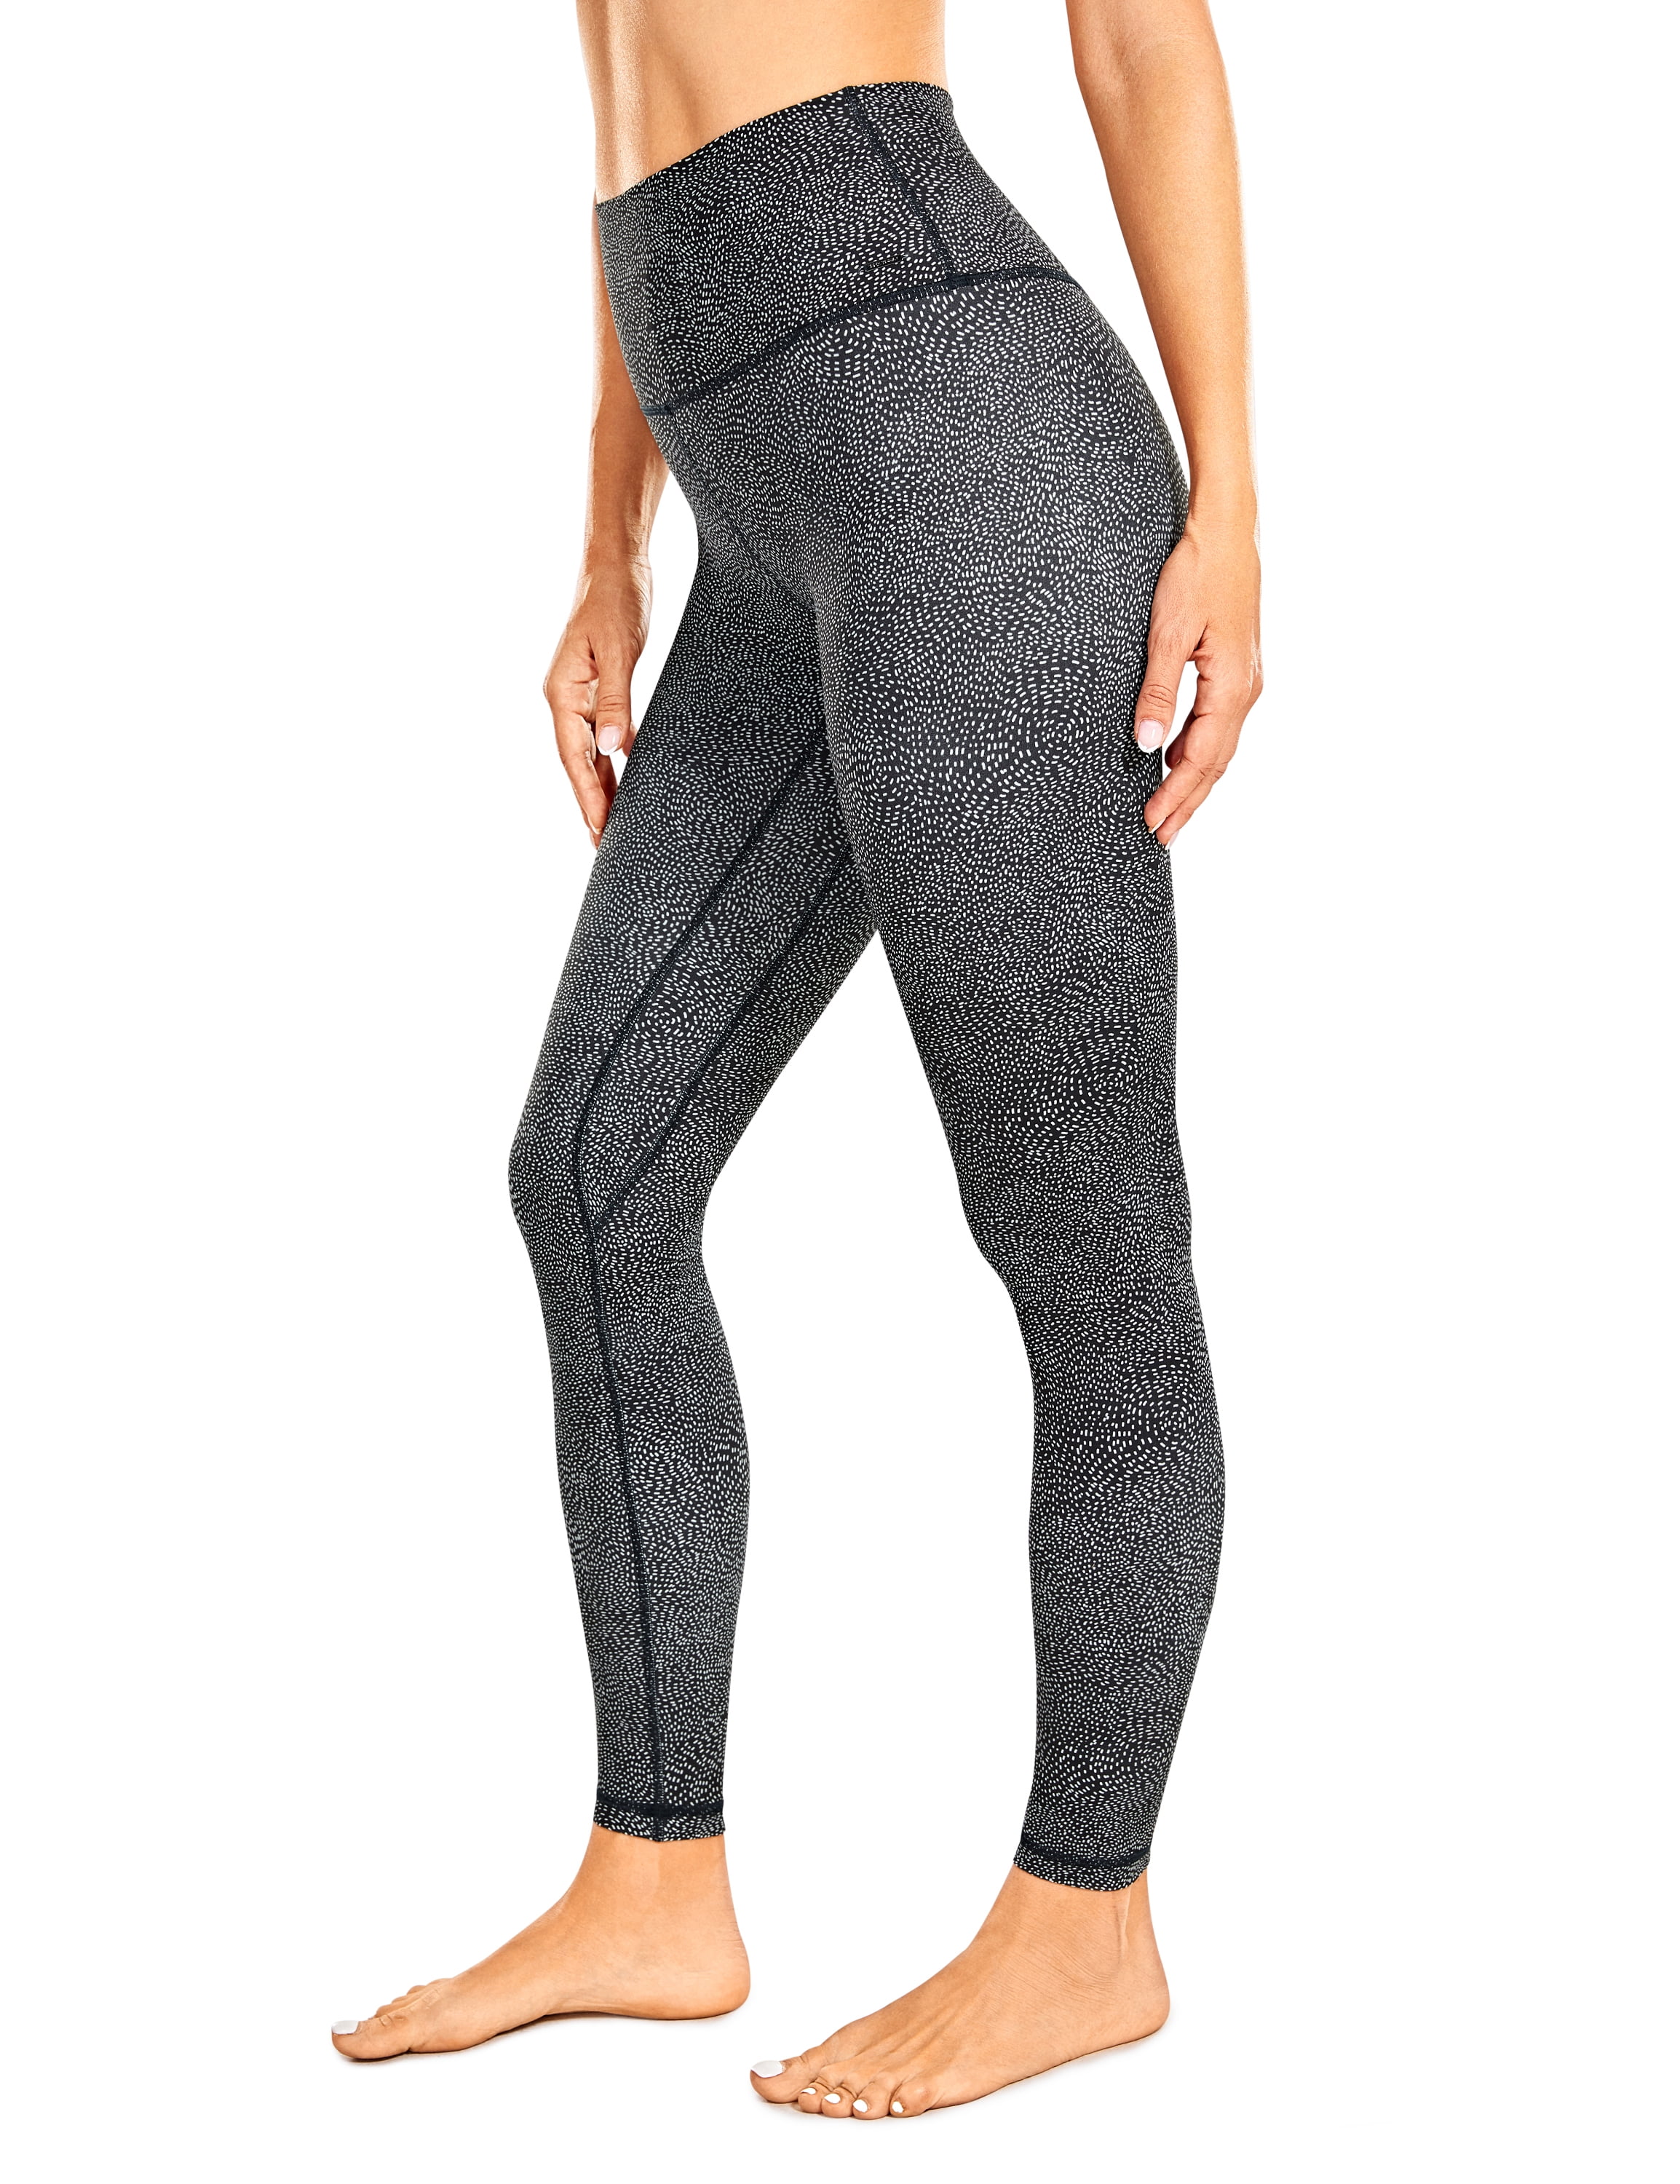 we fleece Leggings for Women-High Waisted Workout Women Leggings Running Tummy Control Yoga Pants 